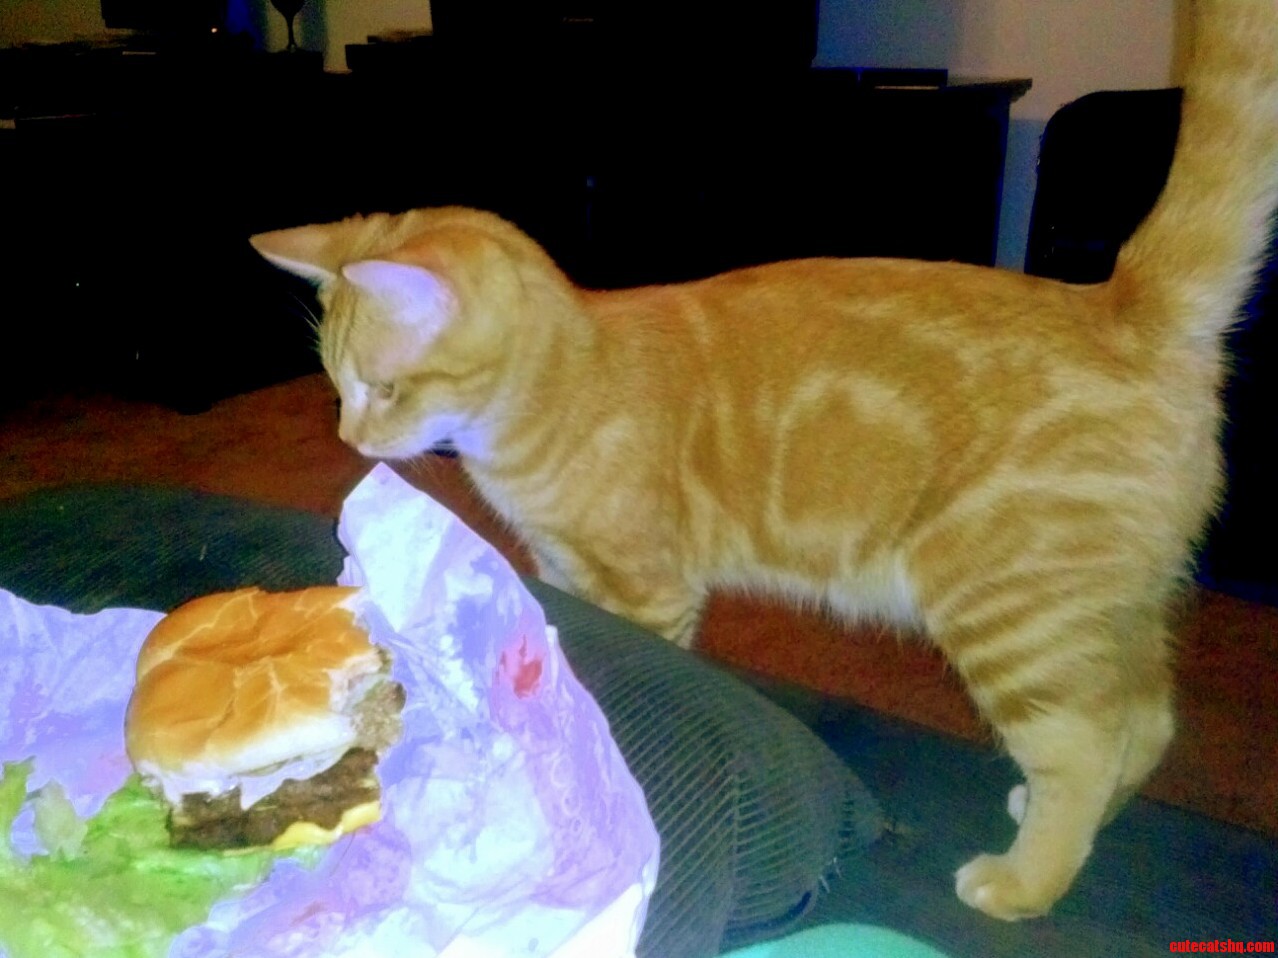 She Wants A Hamburger Too